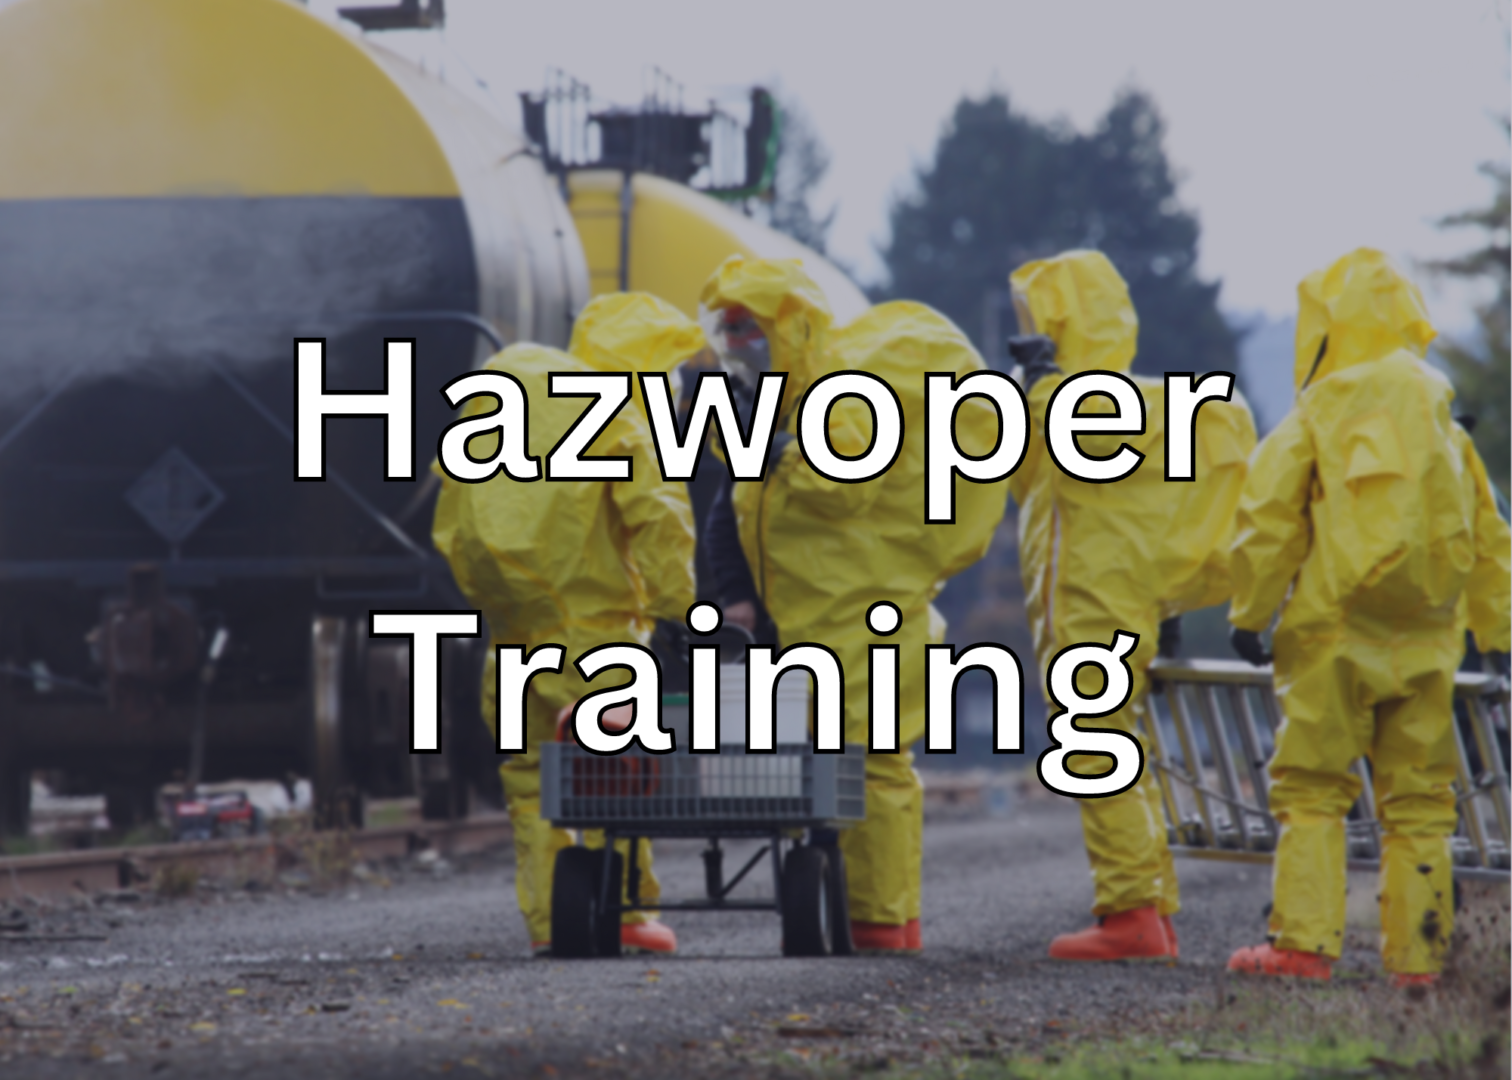 Hazwoper Training